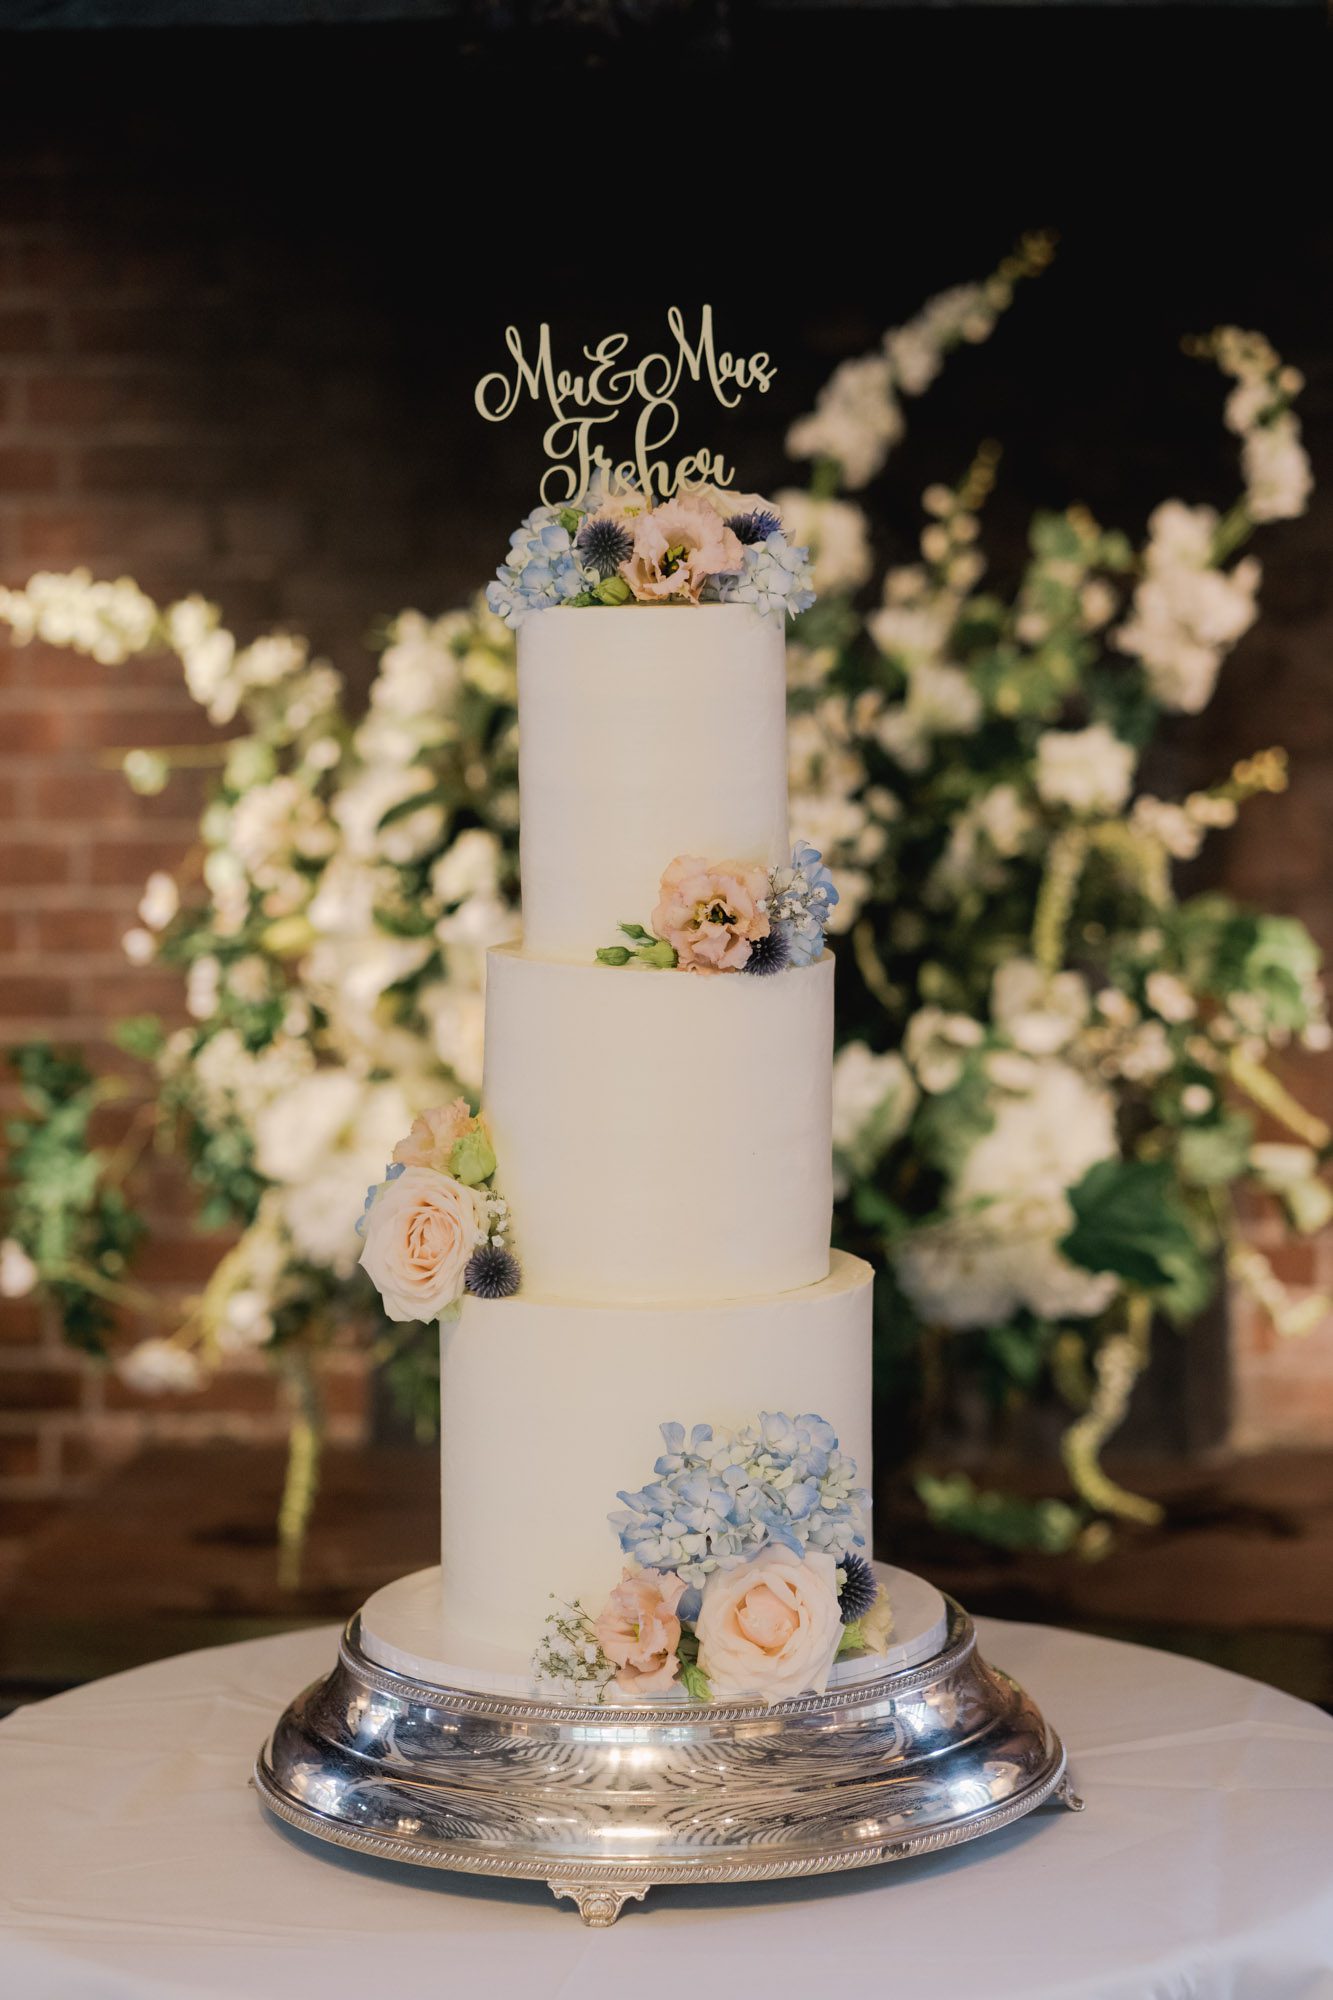 A wedding cake at Ramster Hall.